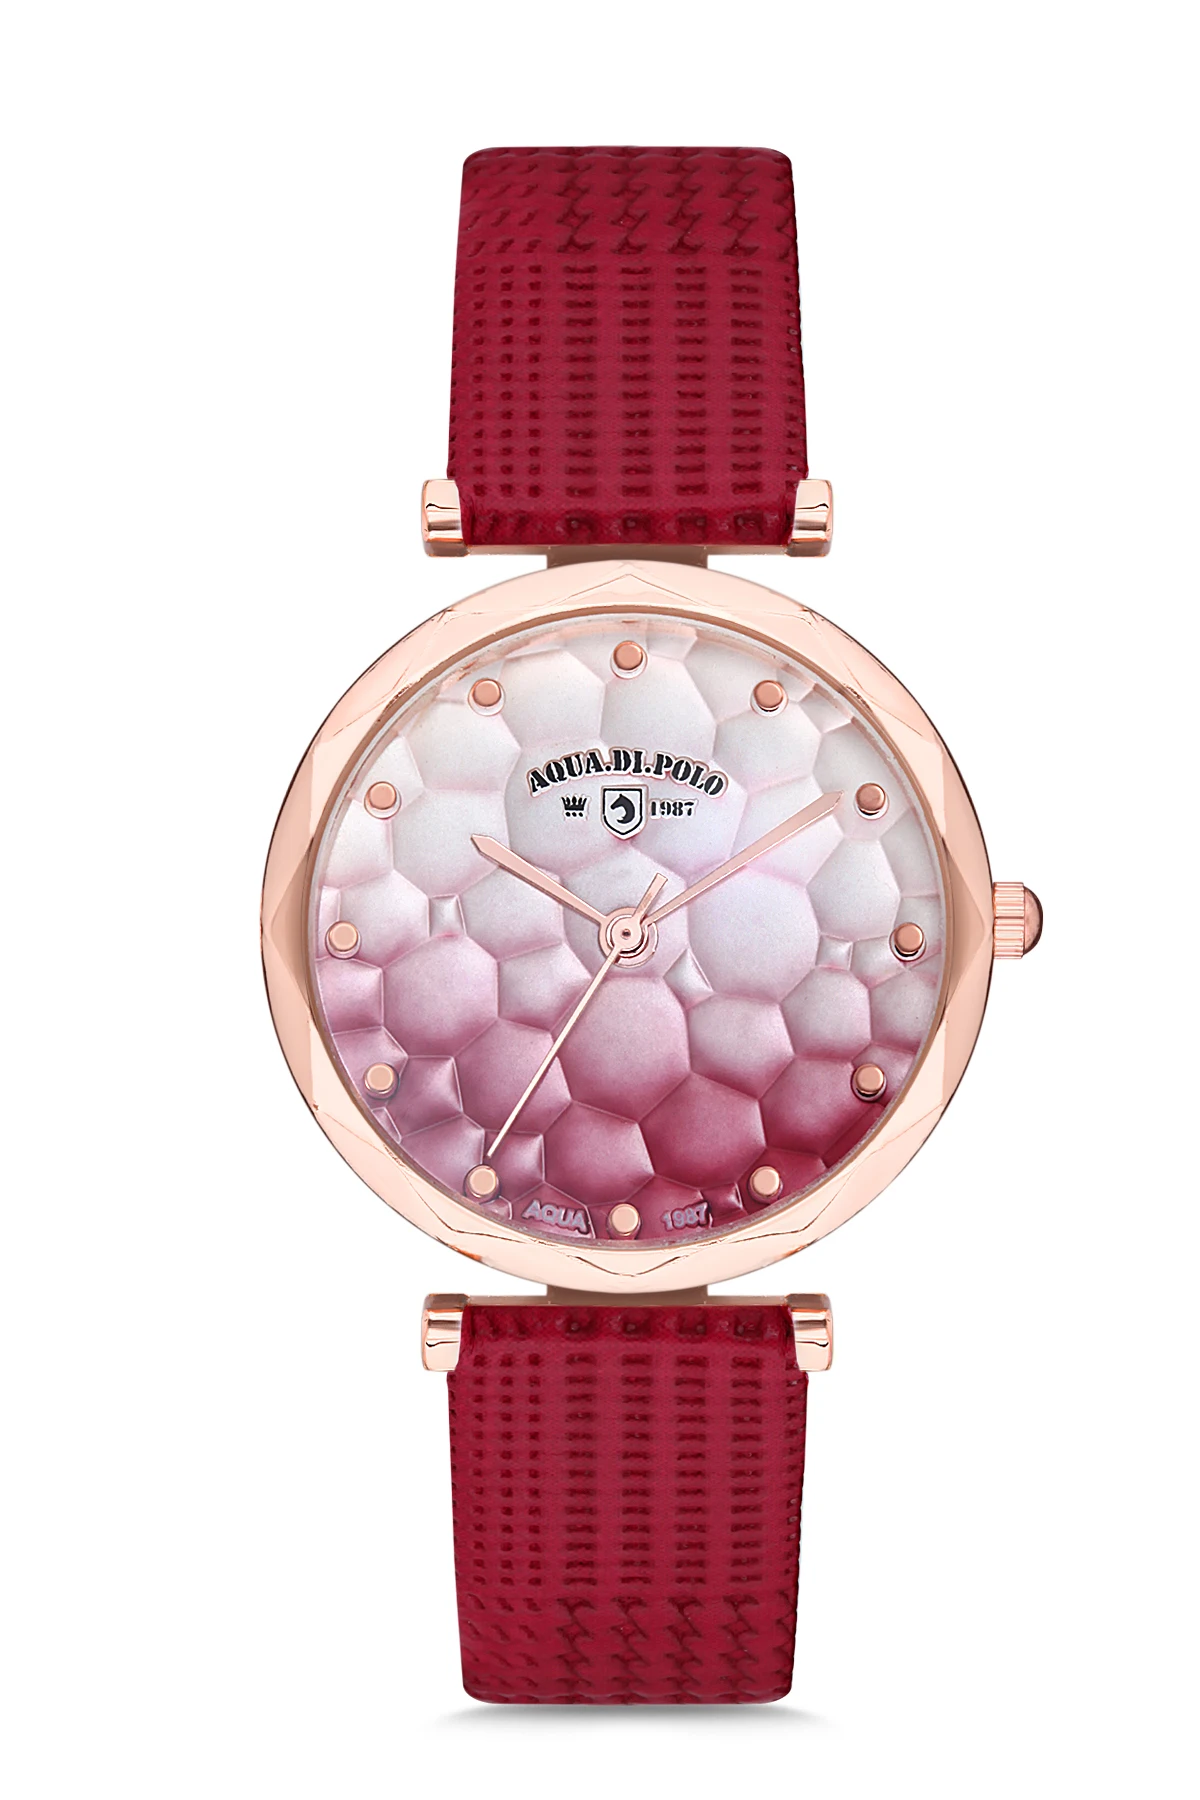 

2020 top Brand Luxury Fashion Women 'S Burgundy Leather Quartz Wristwatches Clock APSV1-A9433-KDBB2 Aqua di Polo 1987